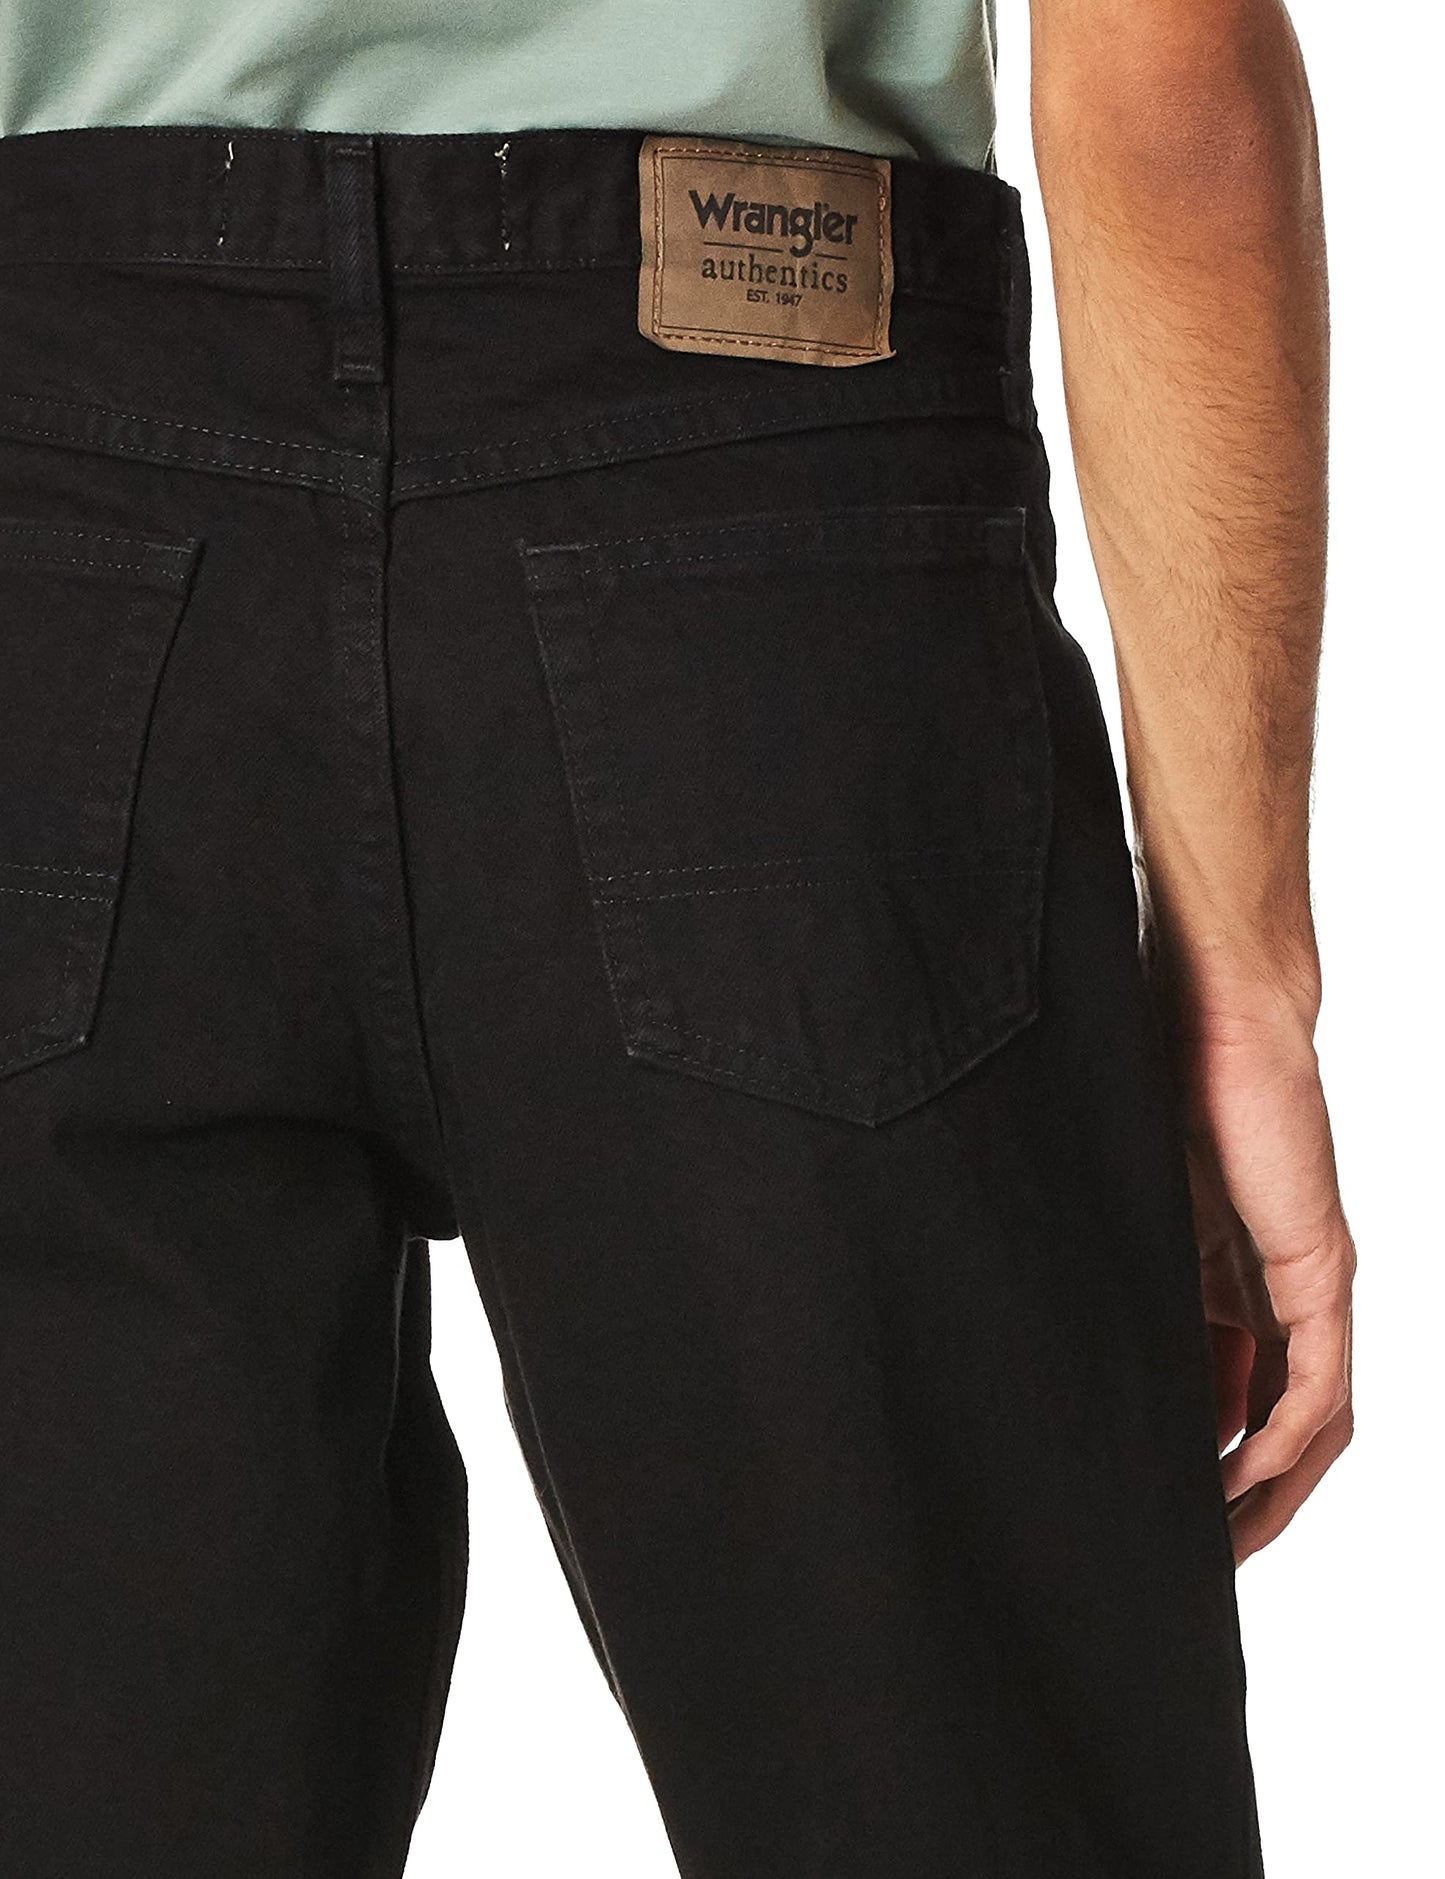 Wrangler Authentics Men's Classic 5-Pocket Relaxed Fit Cotton Jean, Black, 35W x 30L